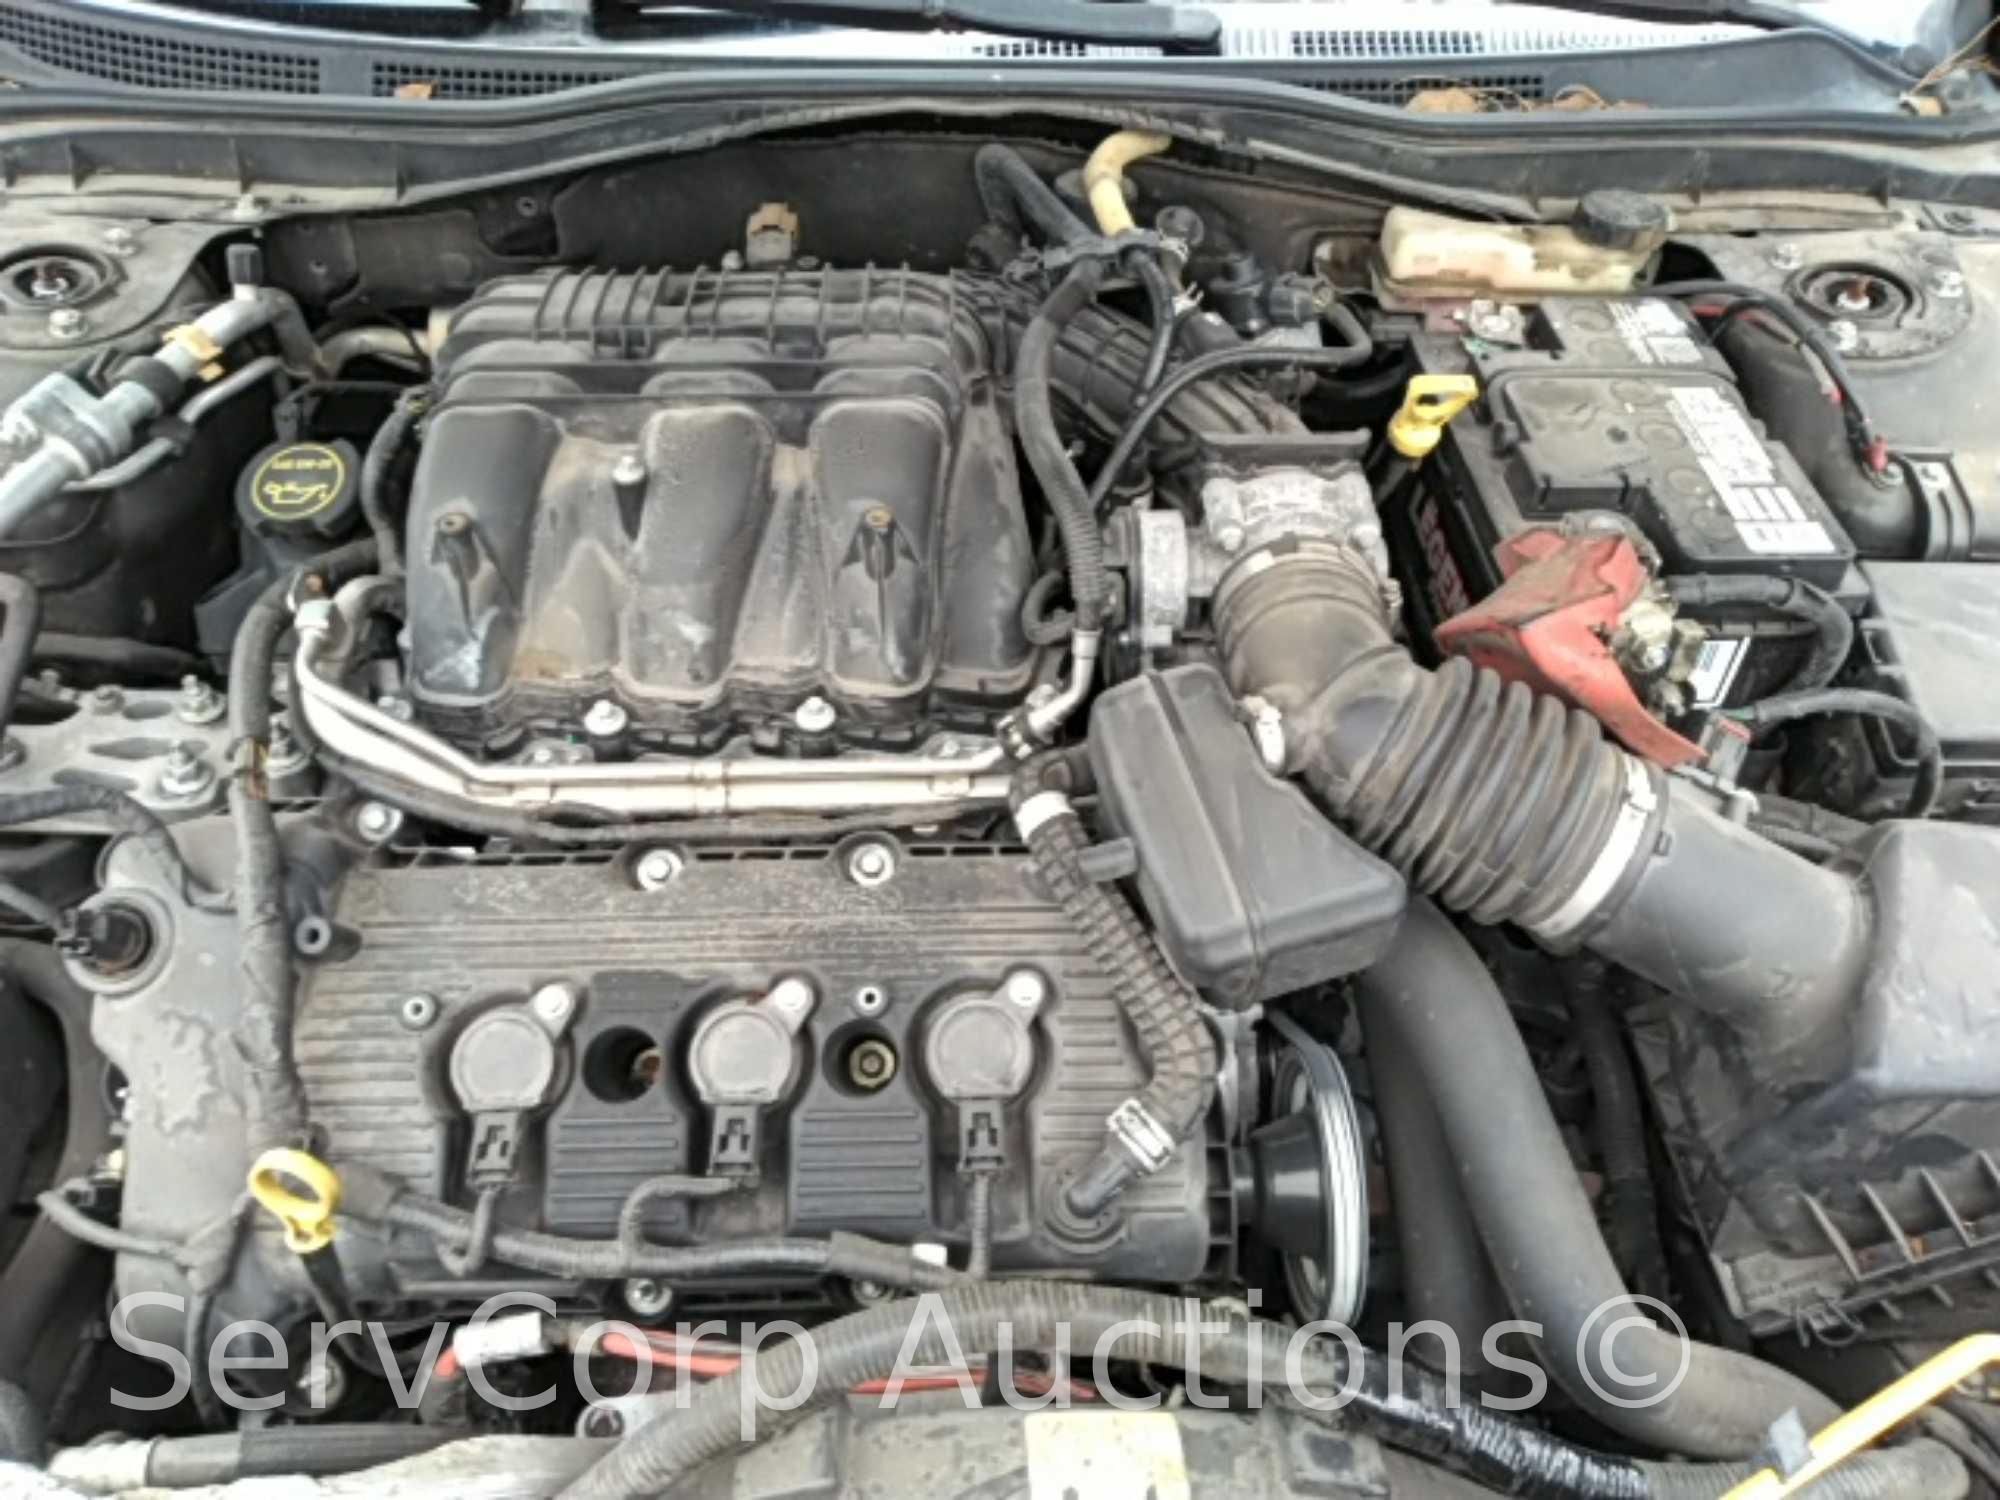 2010 Ford Fusion Passenger Car, VIN # 3FAHP0HGXAR340523